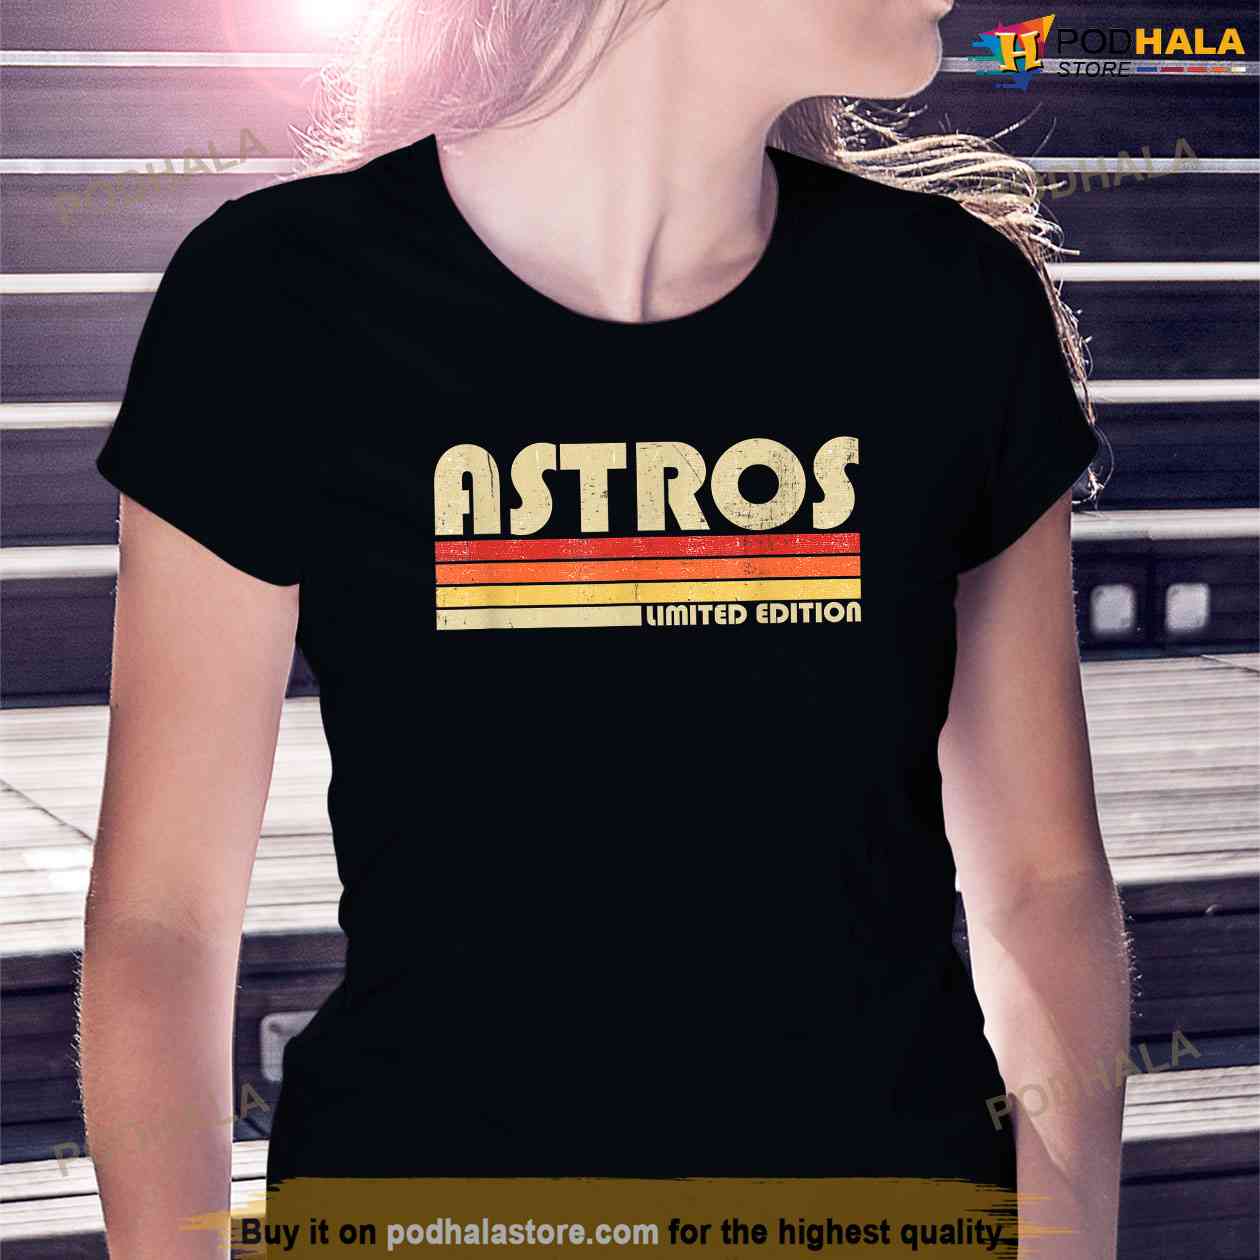 astros t shirt men